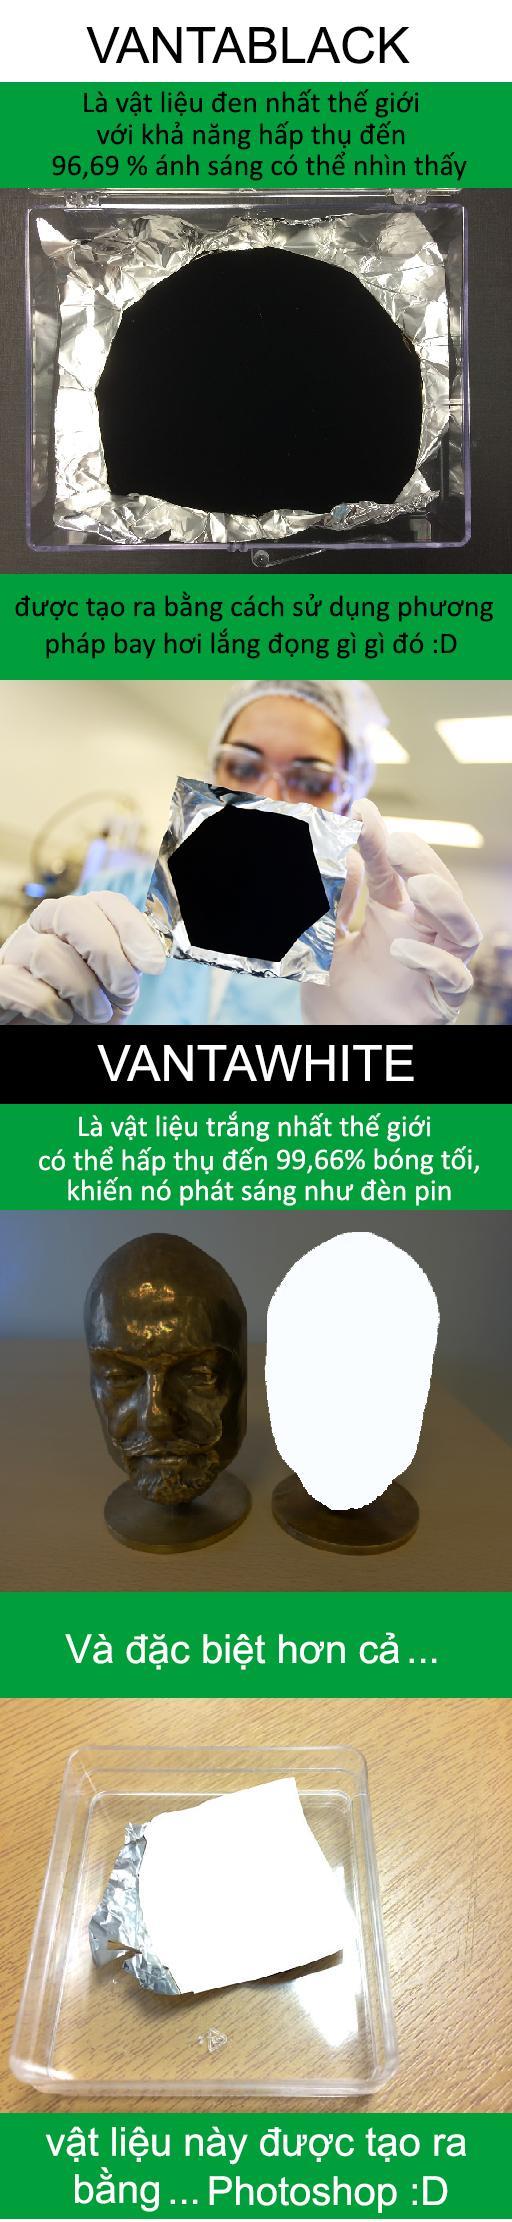 Vantablack vs. Vantawhite